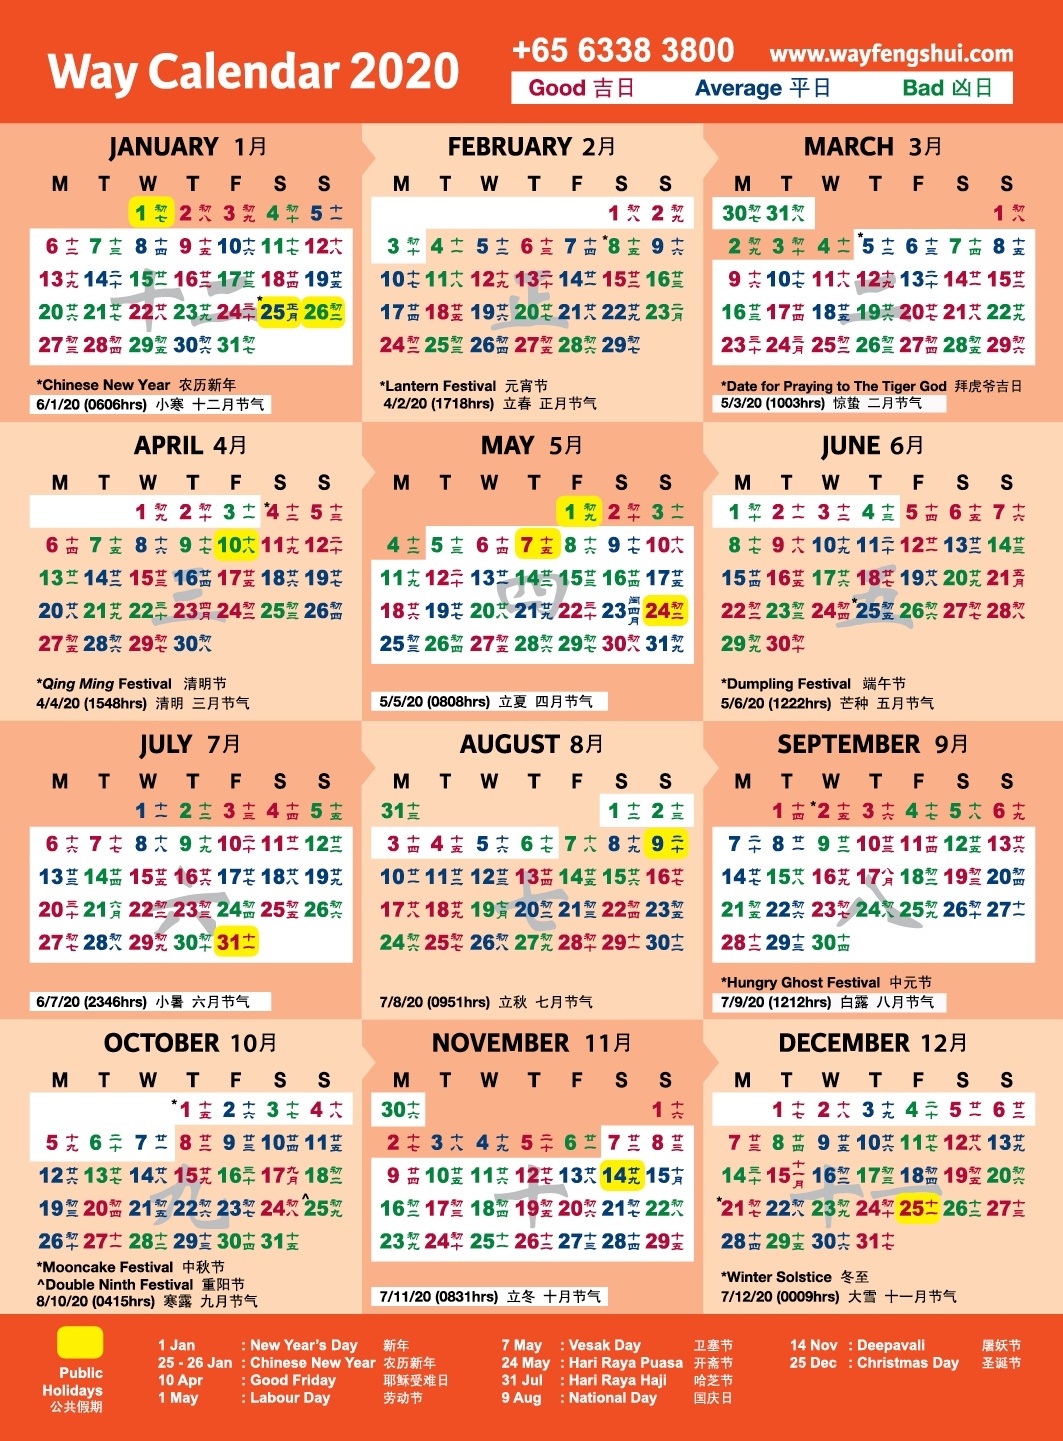 2020 Way Calendar - Feng Shui Master Singapore, Chinese Year 2020 Calendar Singapore